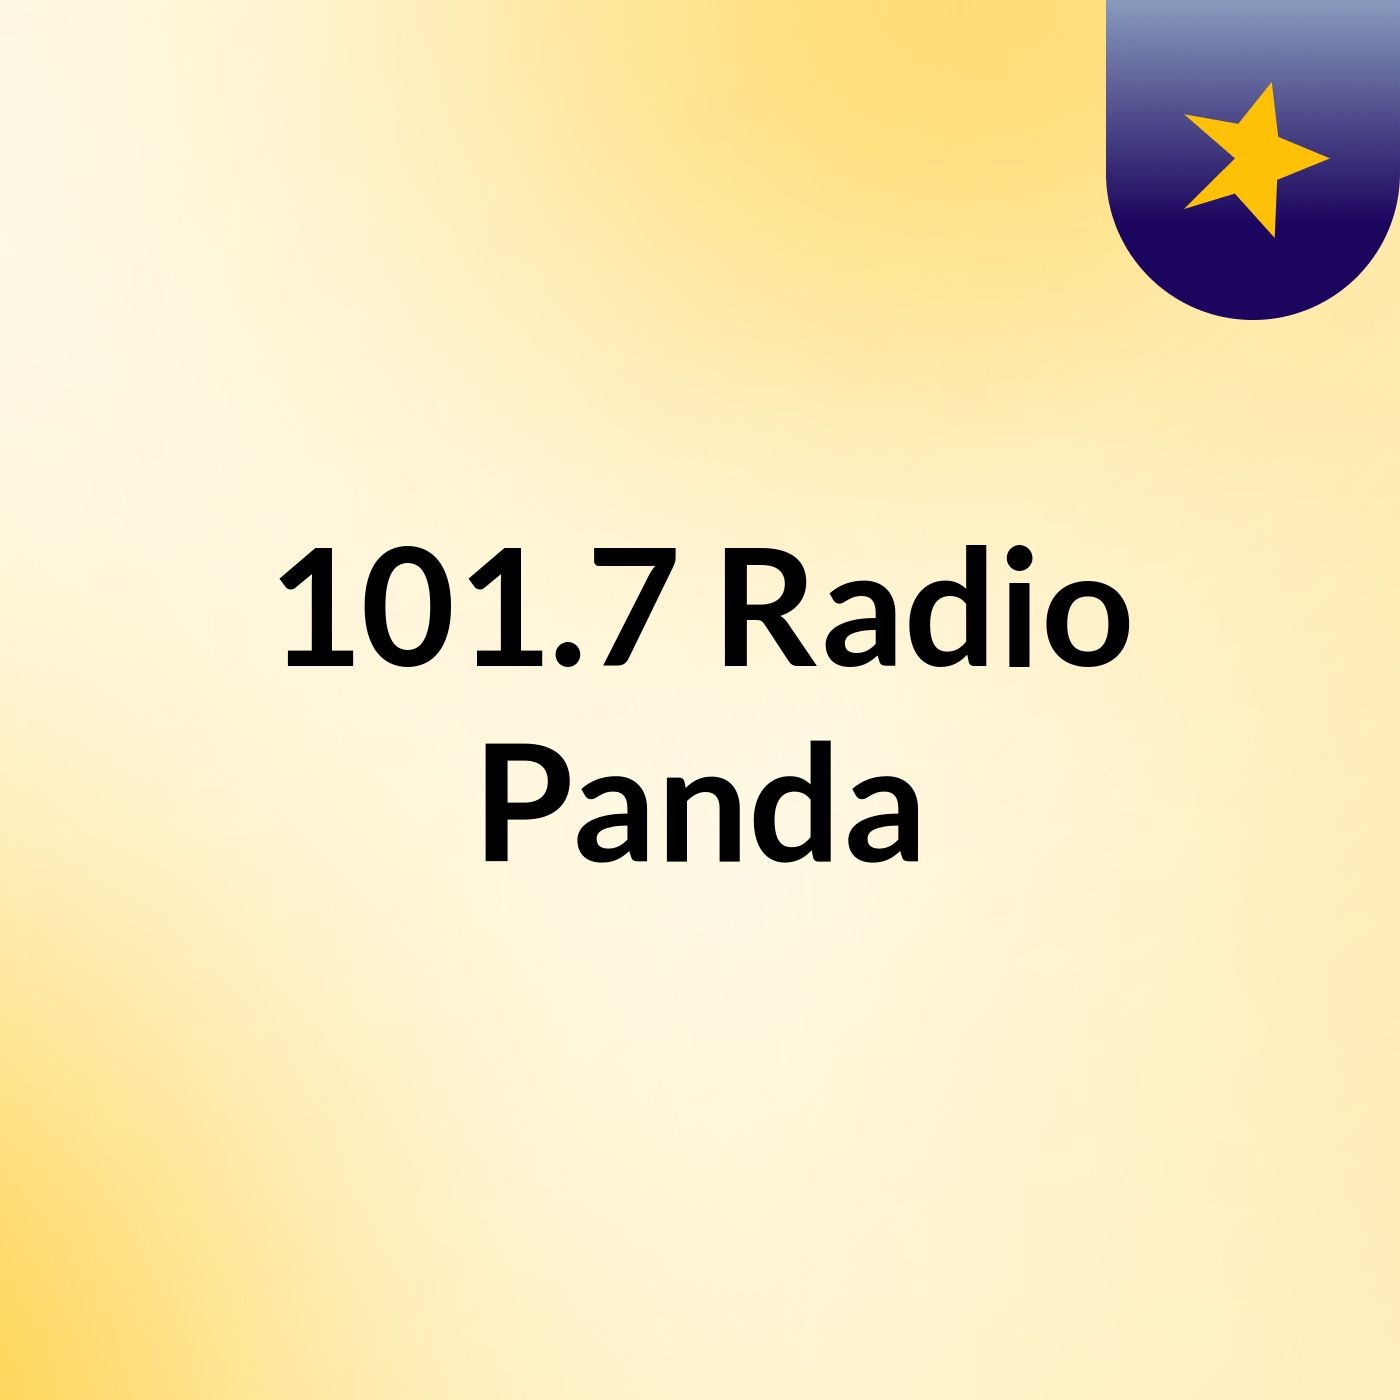 101.7 Radio Panda